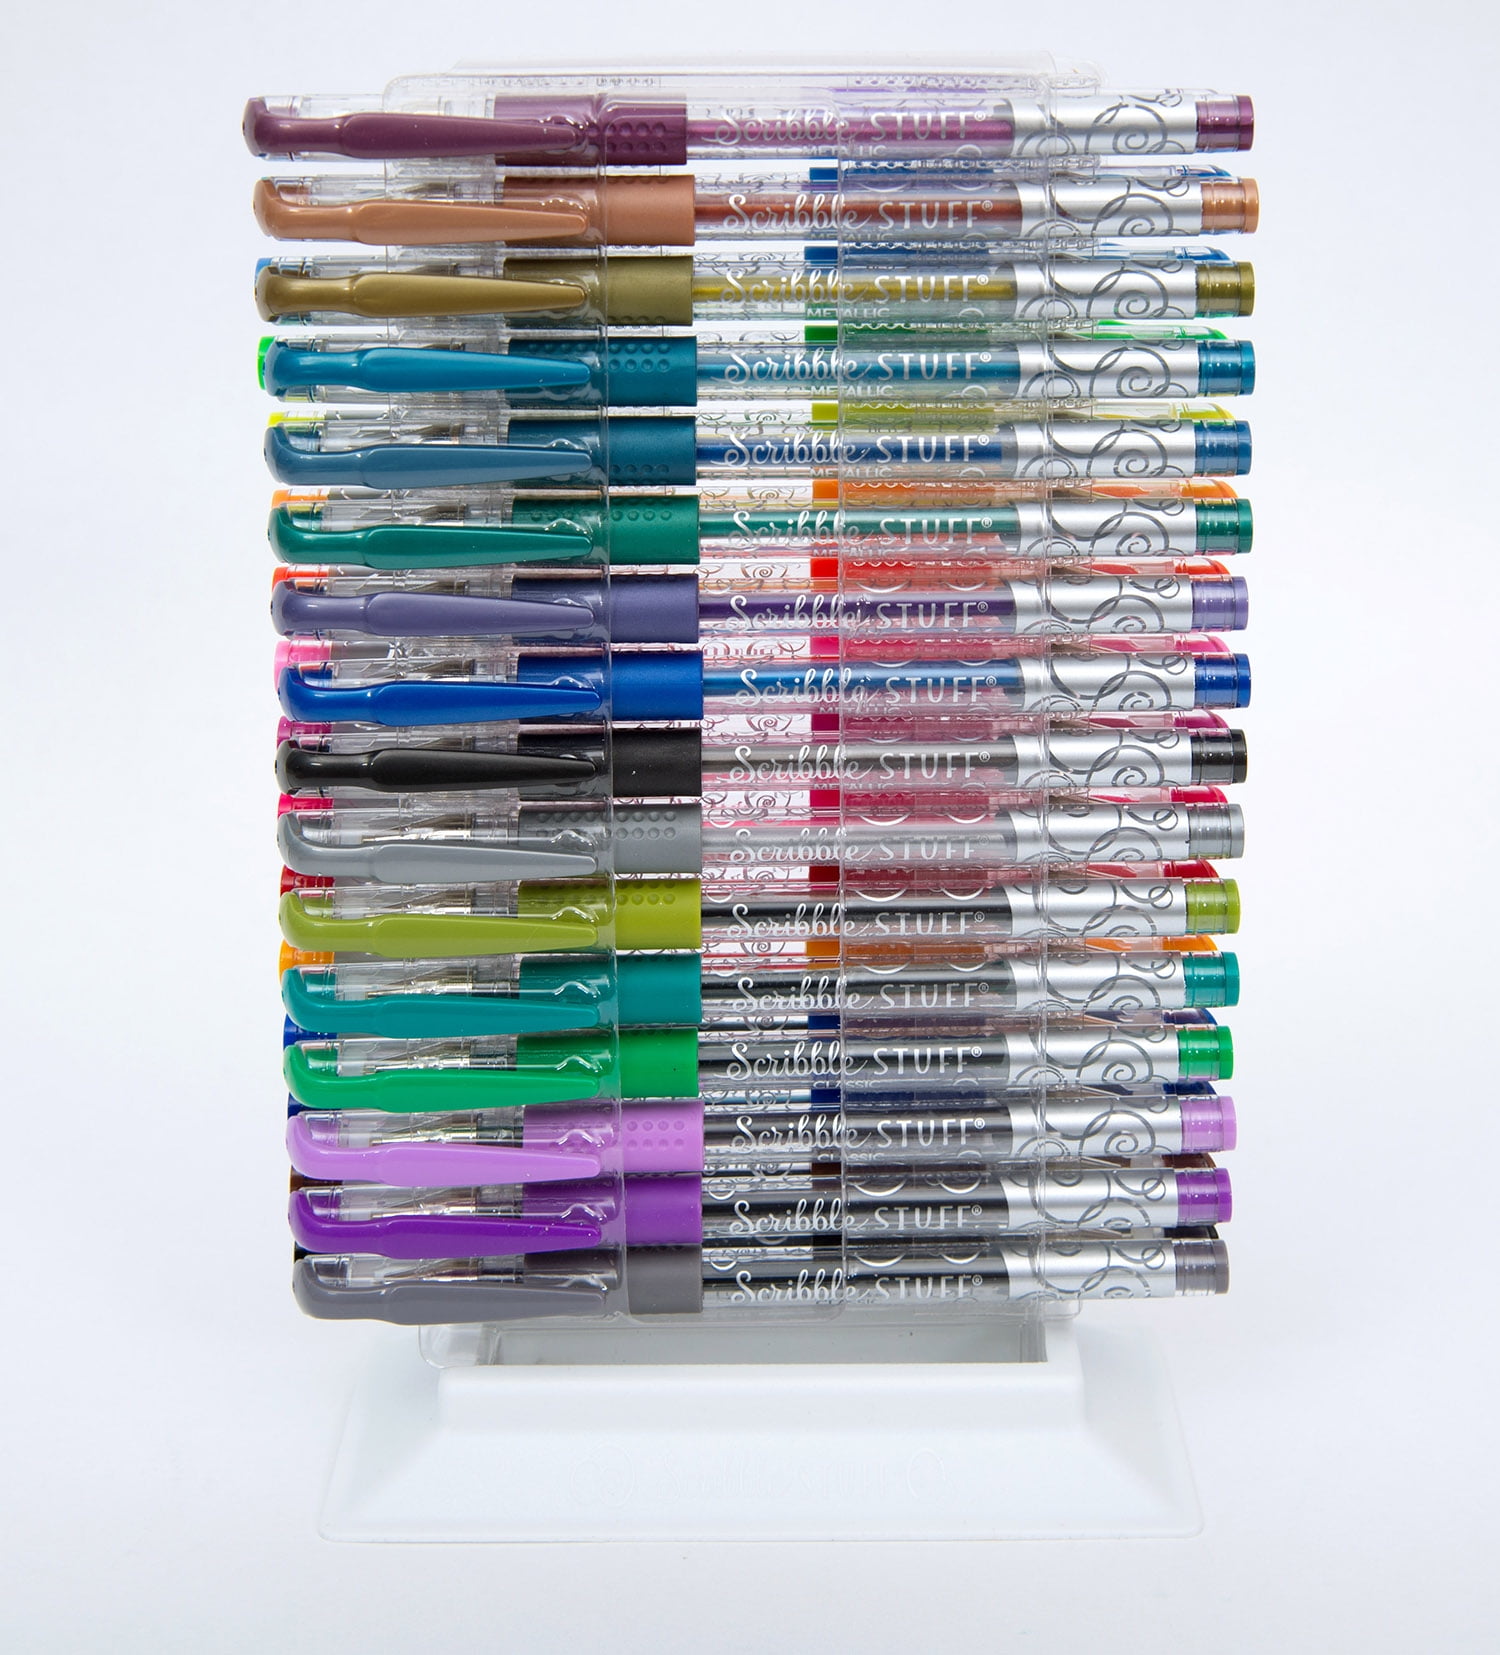 Buy GLOO Solid Round Gel Pen - Set of 12 Online for Kids